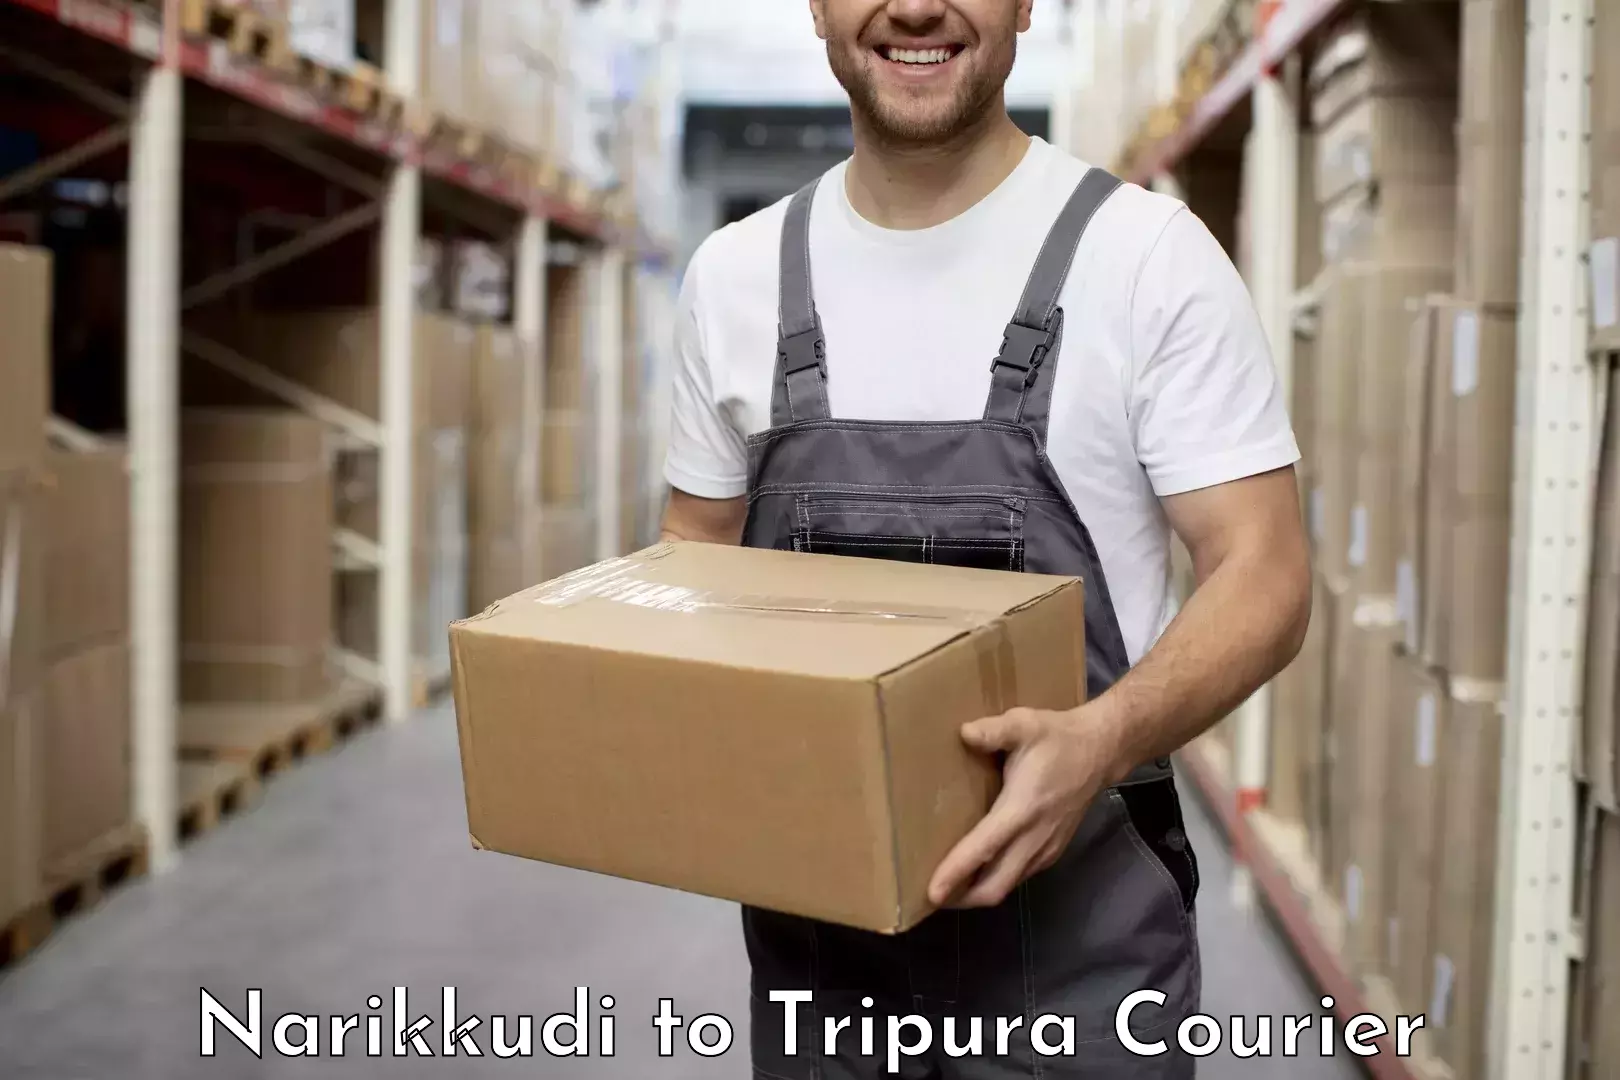 Express courier capabilities Narikkudi to Udaipur Tripura